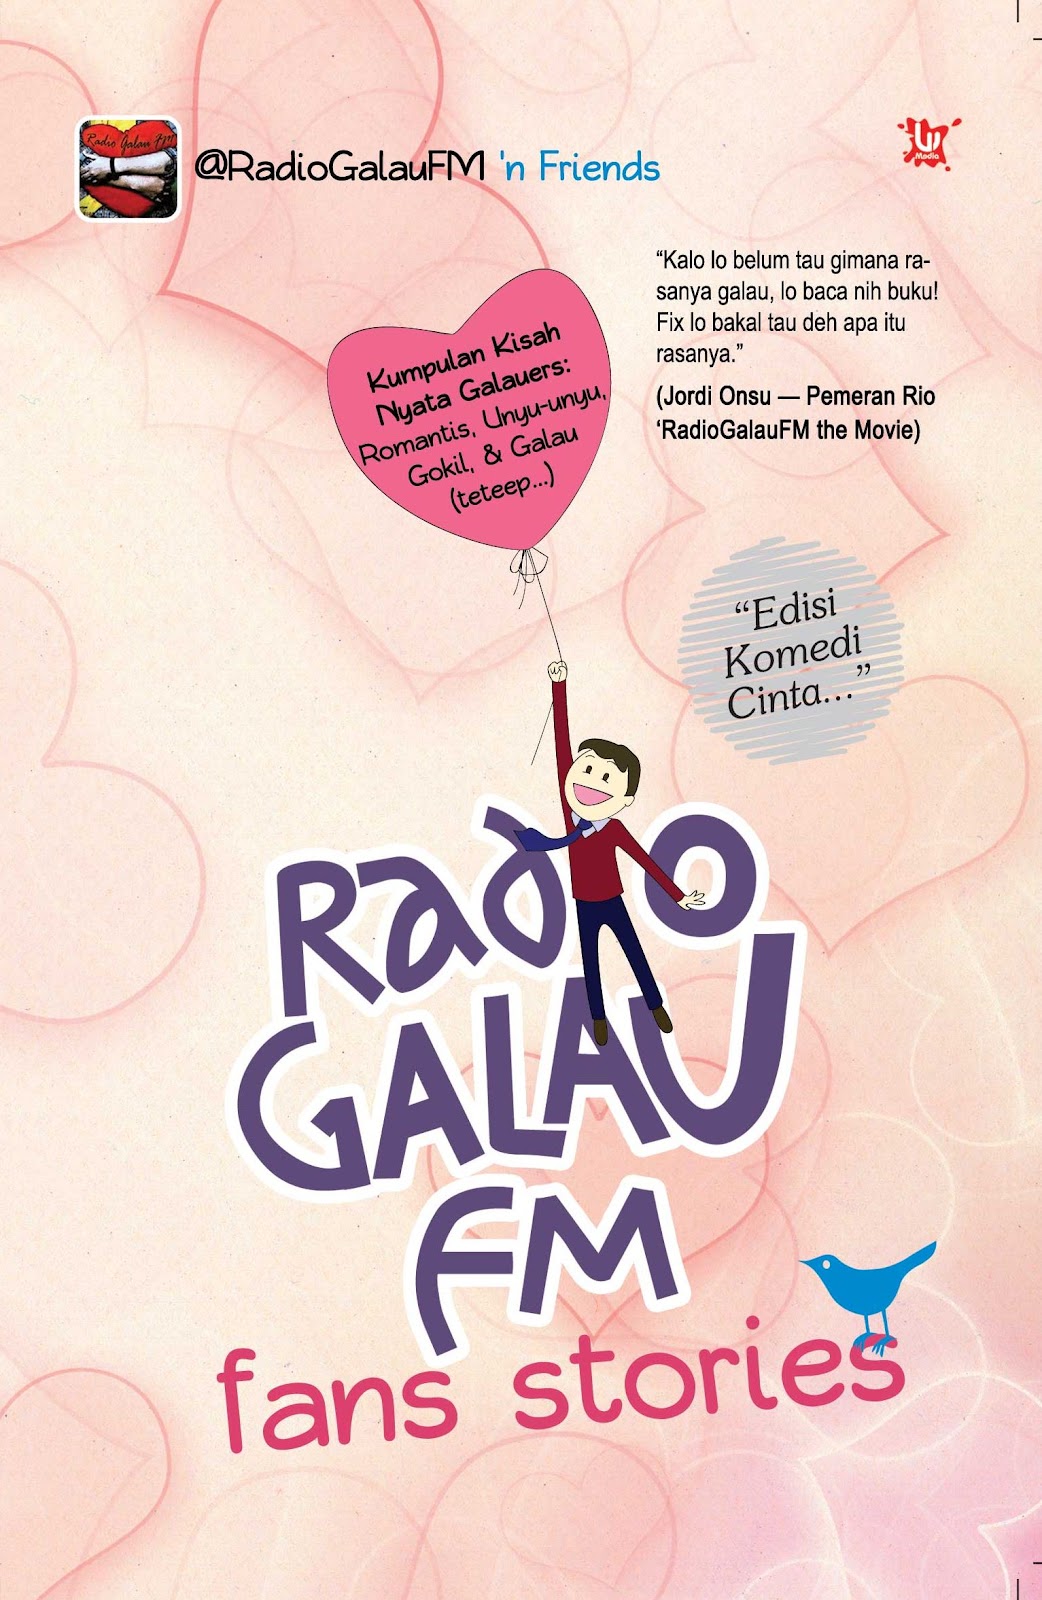 [Review] Radio Galau FM: Fans Stories - @RadioGalauFM 'n Friends - Rido